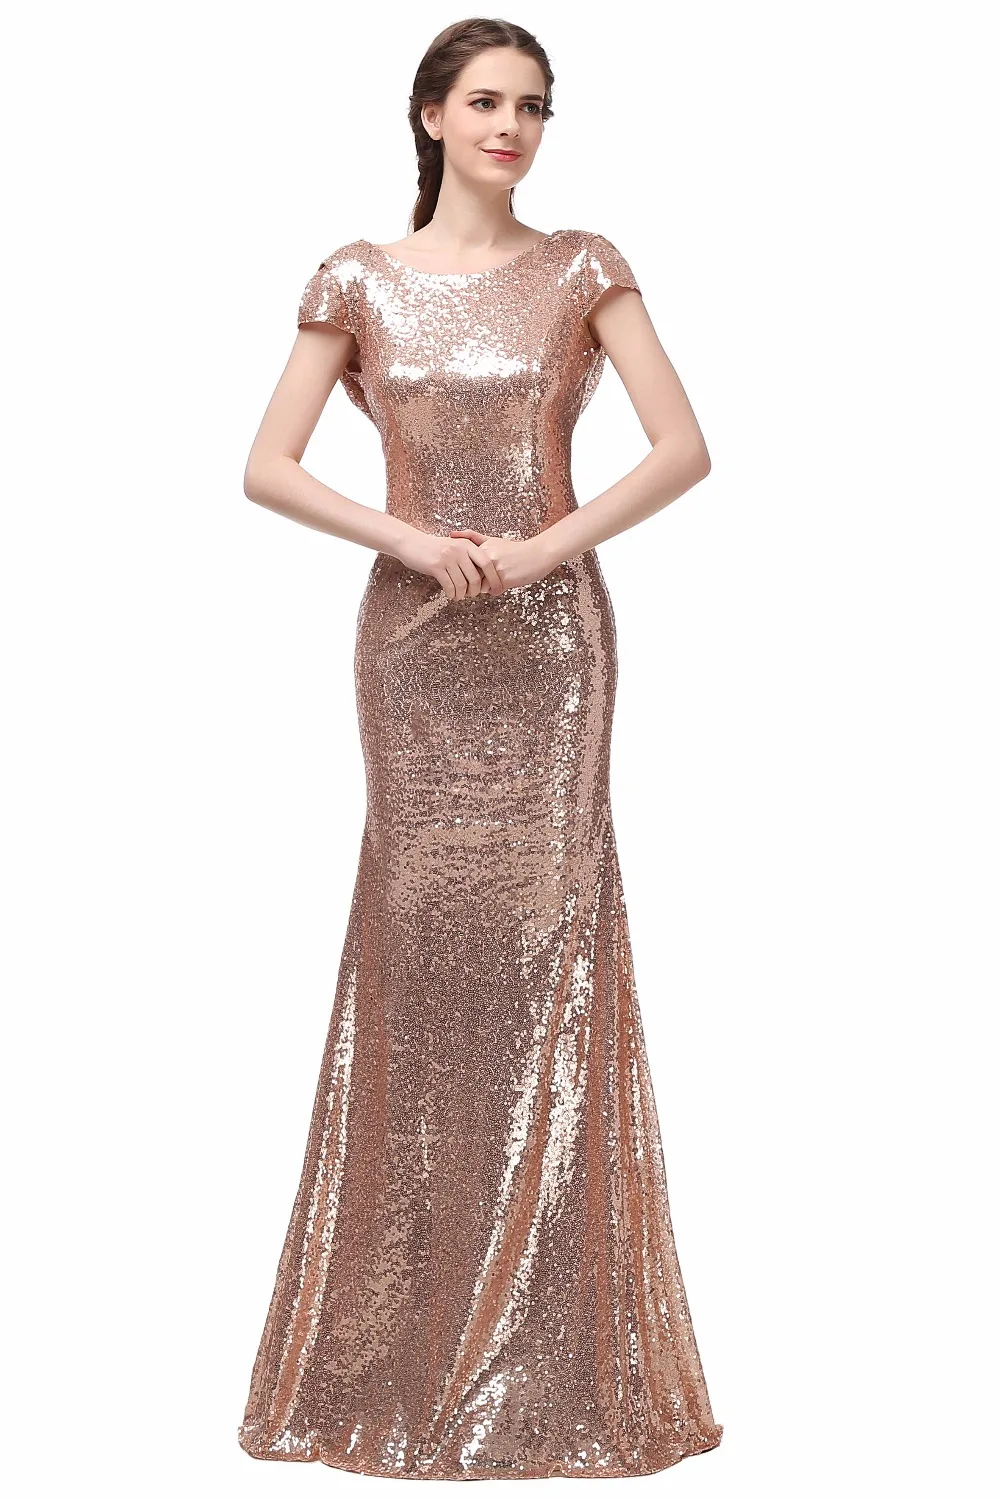 Champagne Long vestido longo Sequined Short Sleeve Floor Length Bridesmaid Dress 2016 Prom Dress Wedding Party Dress 10